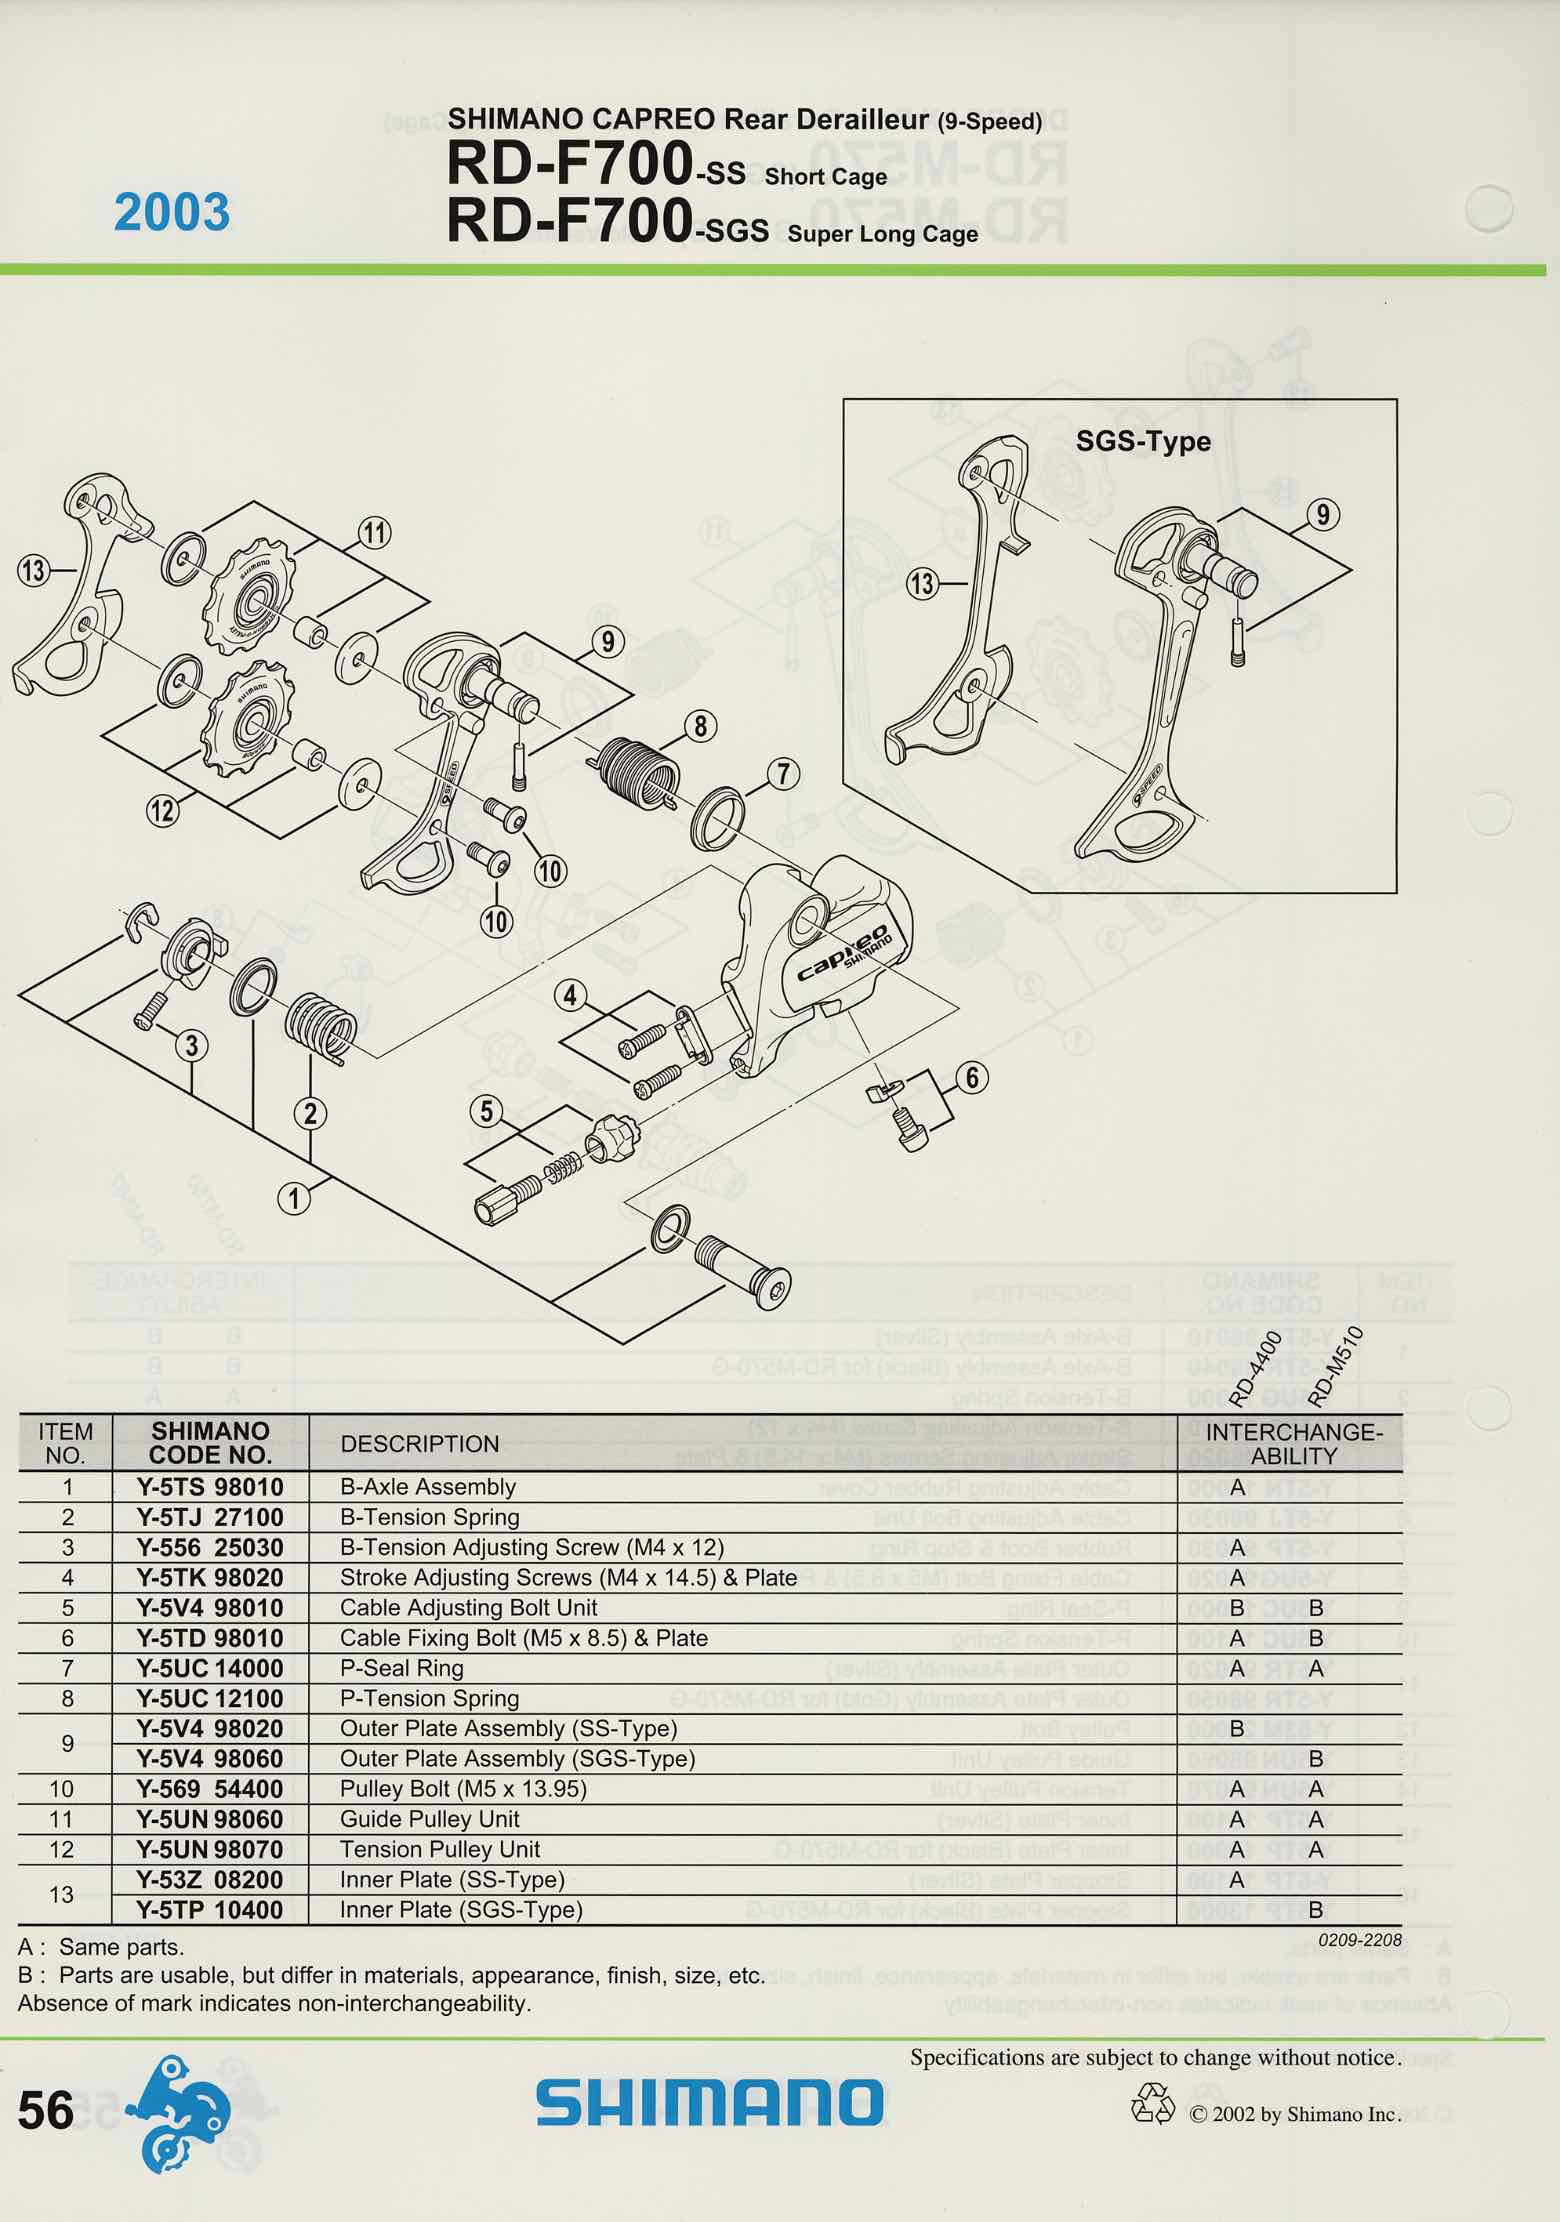 Shimano Spare Parts Catalogue - 1994 to 2004 s5 p56 main image